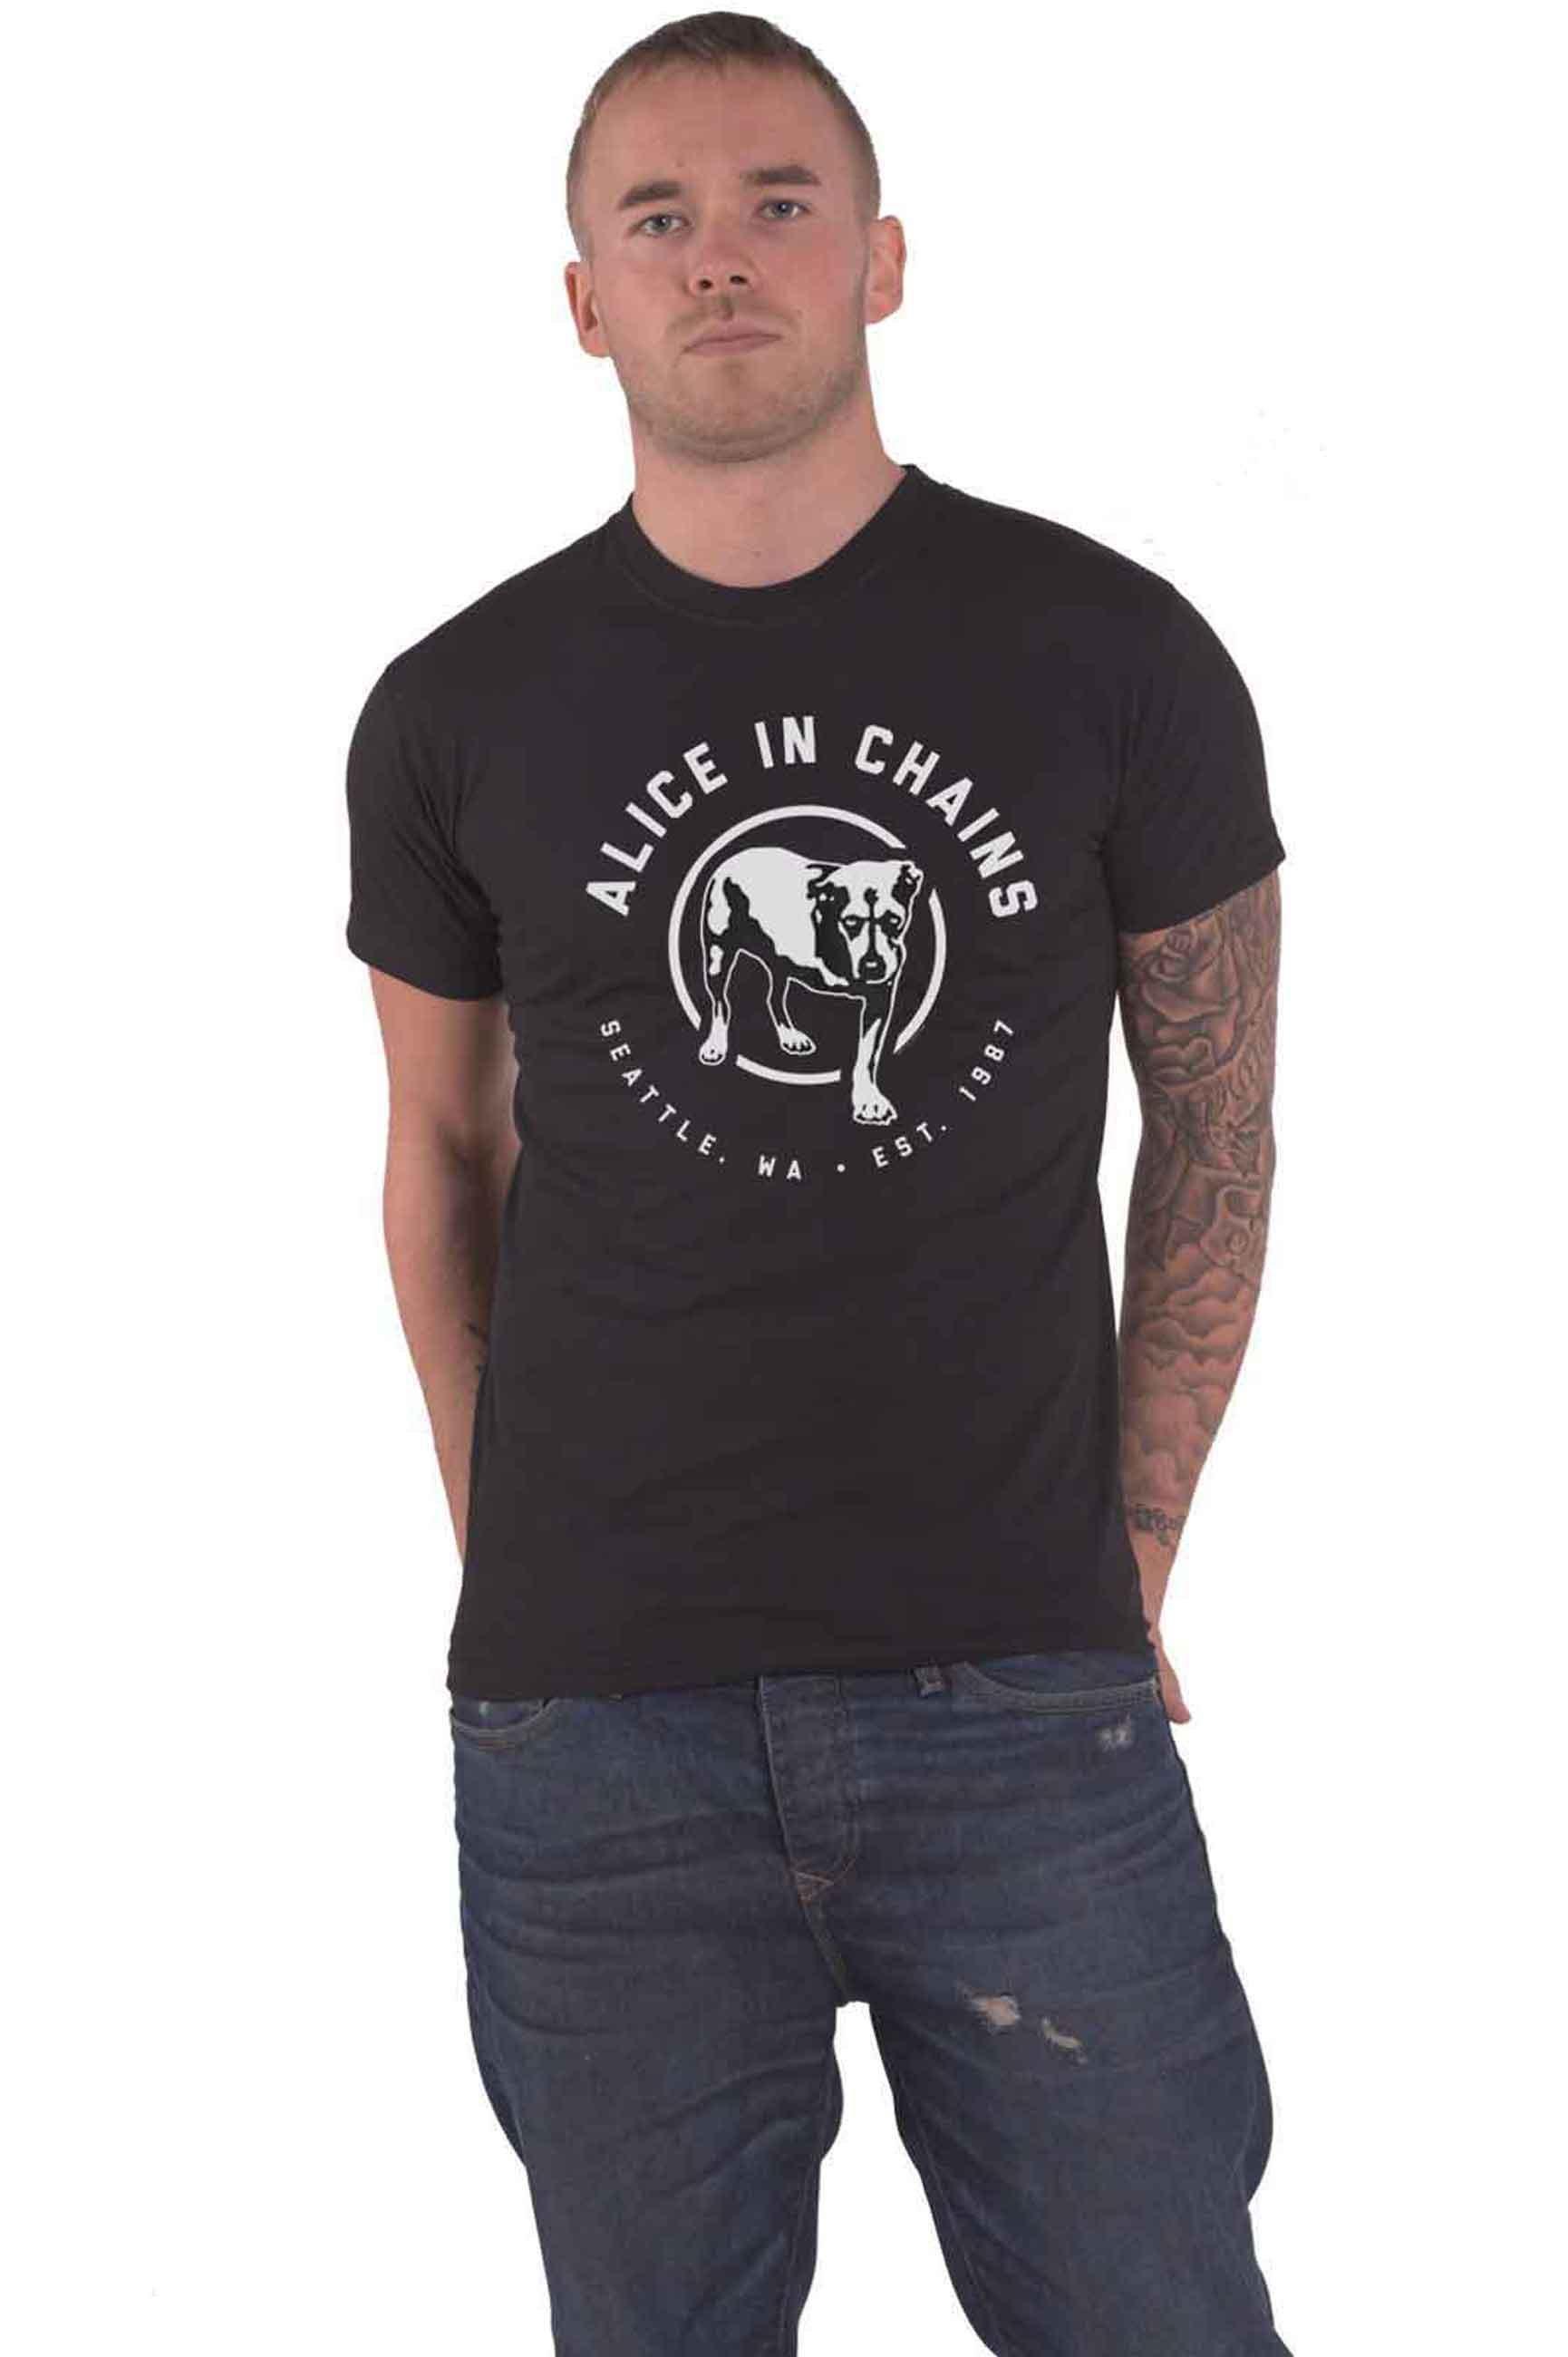 Футболка EST 1987 Alice In Chains, черный футболка in extenso с надписью на 3 года